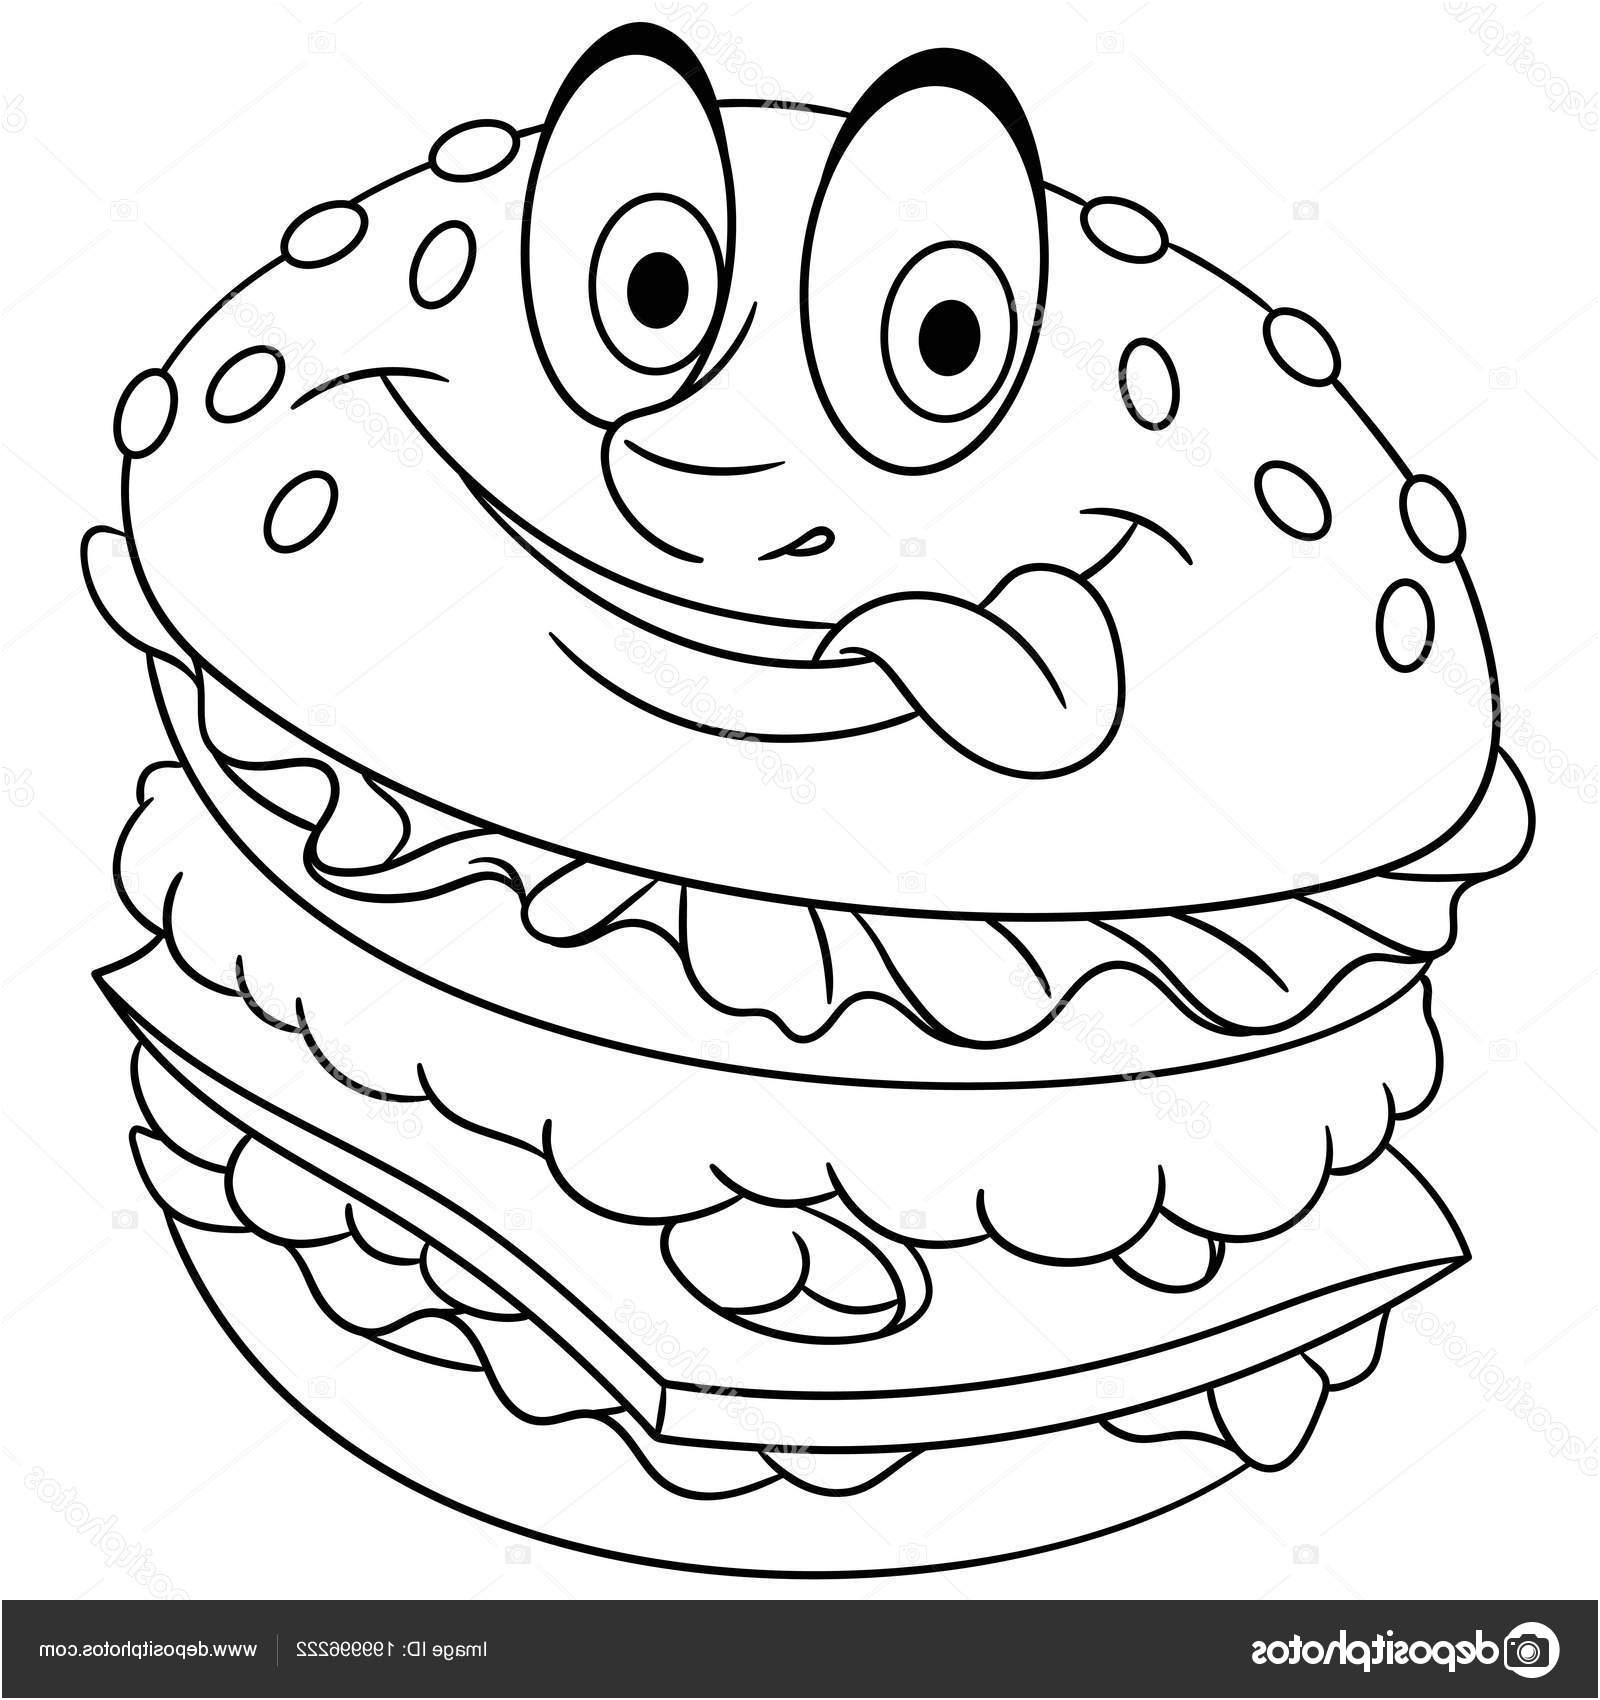 Coloriage De Hamburger Meilleur De 11 Brillant Coloriage De Hamburger Image Coloriage